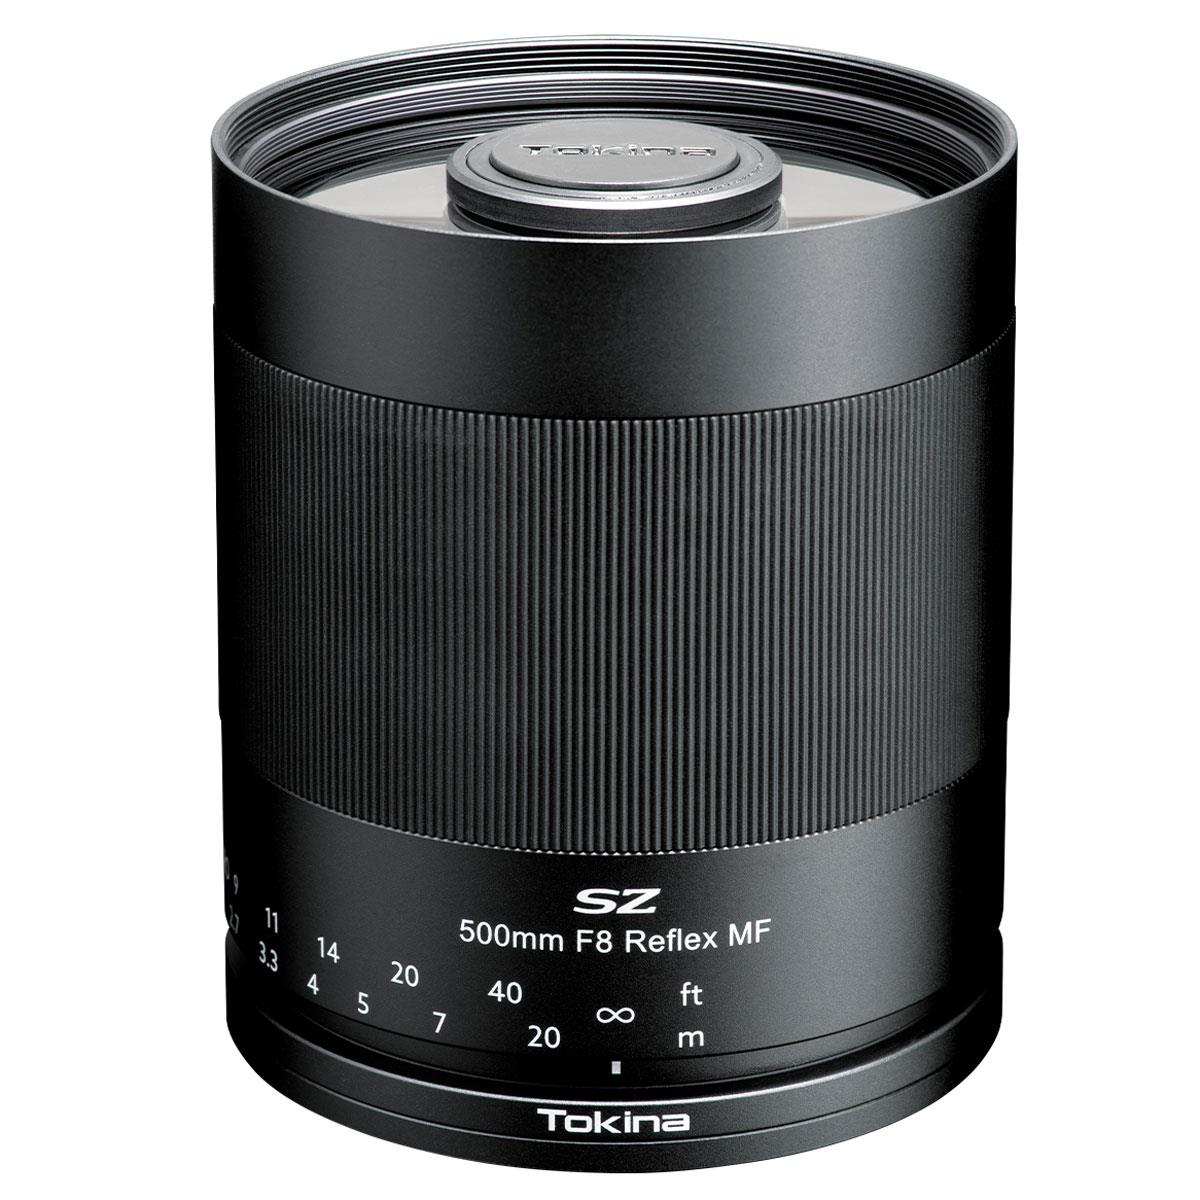 Image of Tokina SZ 500mm f/8 Reflex MF Lens for Canon EF-M